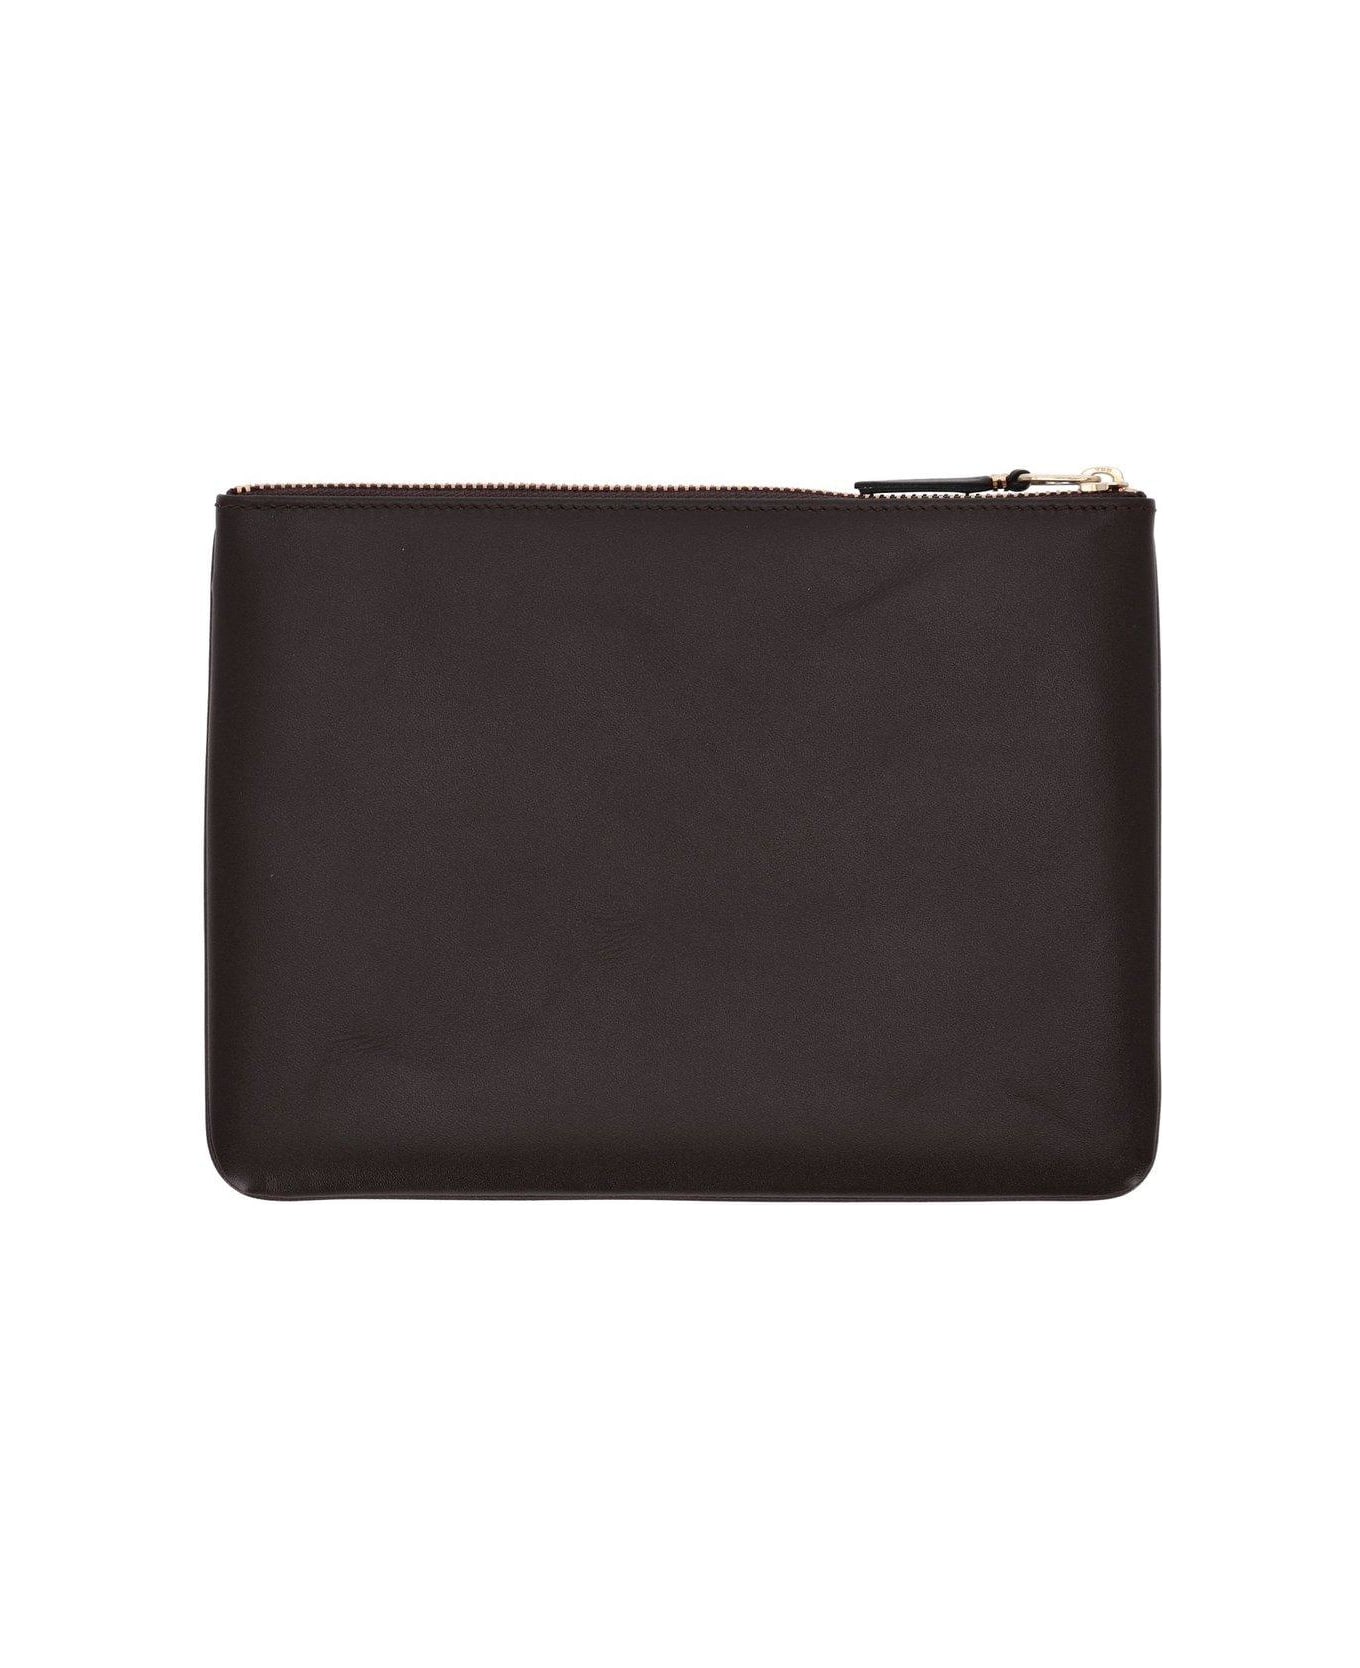 Comme des Garçons Wallet Logo Detailed Zipped Wallet - Brown 財布